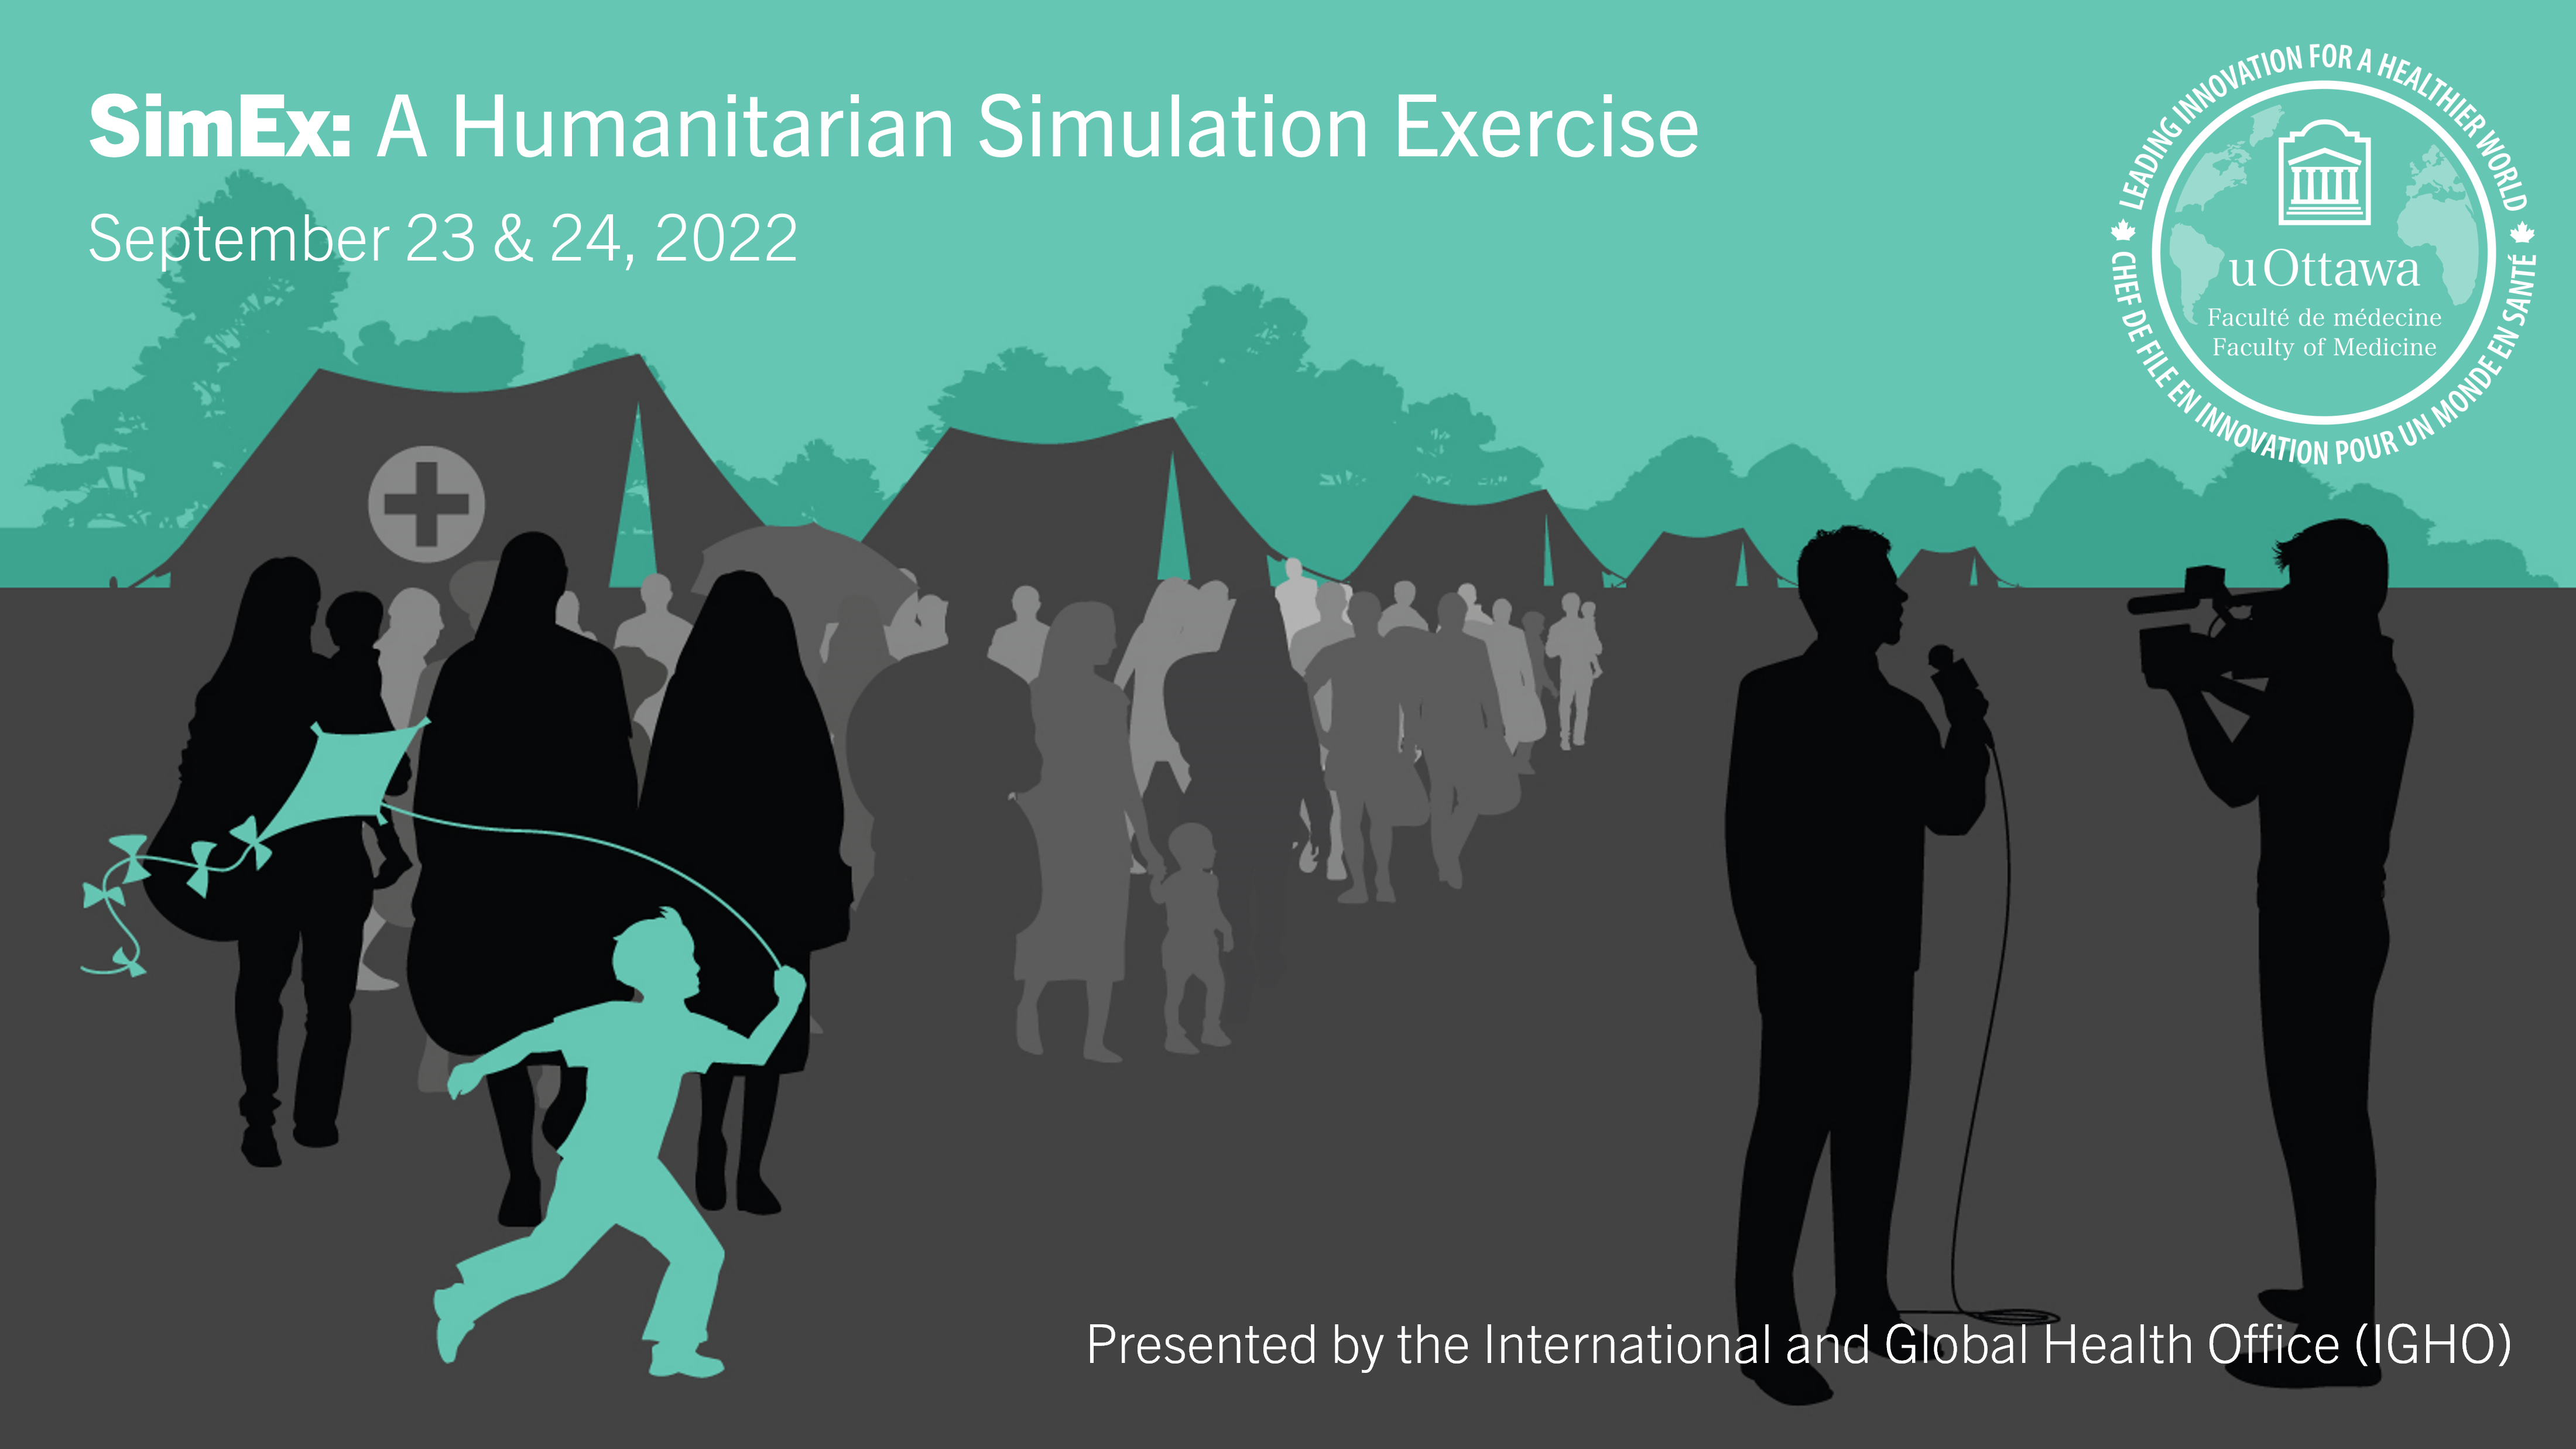 SimEx: A Humanitarian Simulation Exercise poster